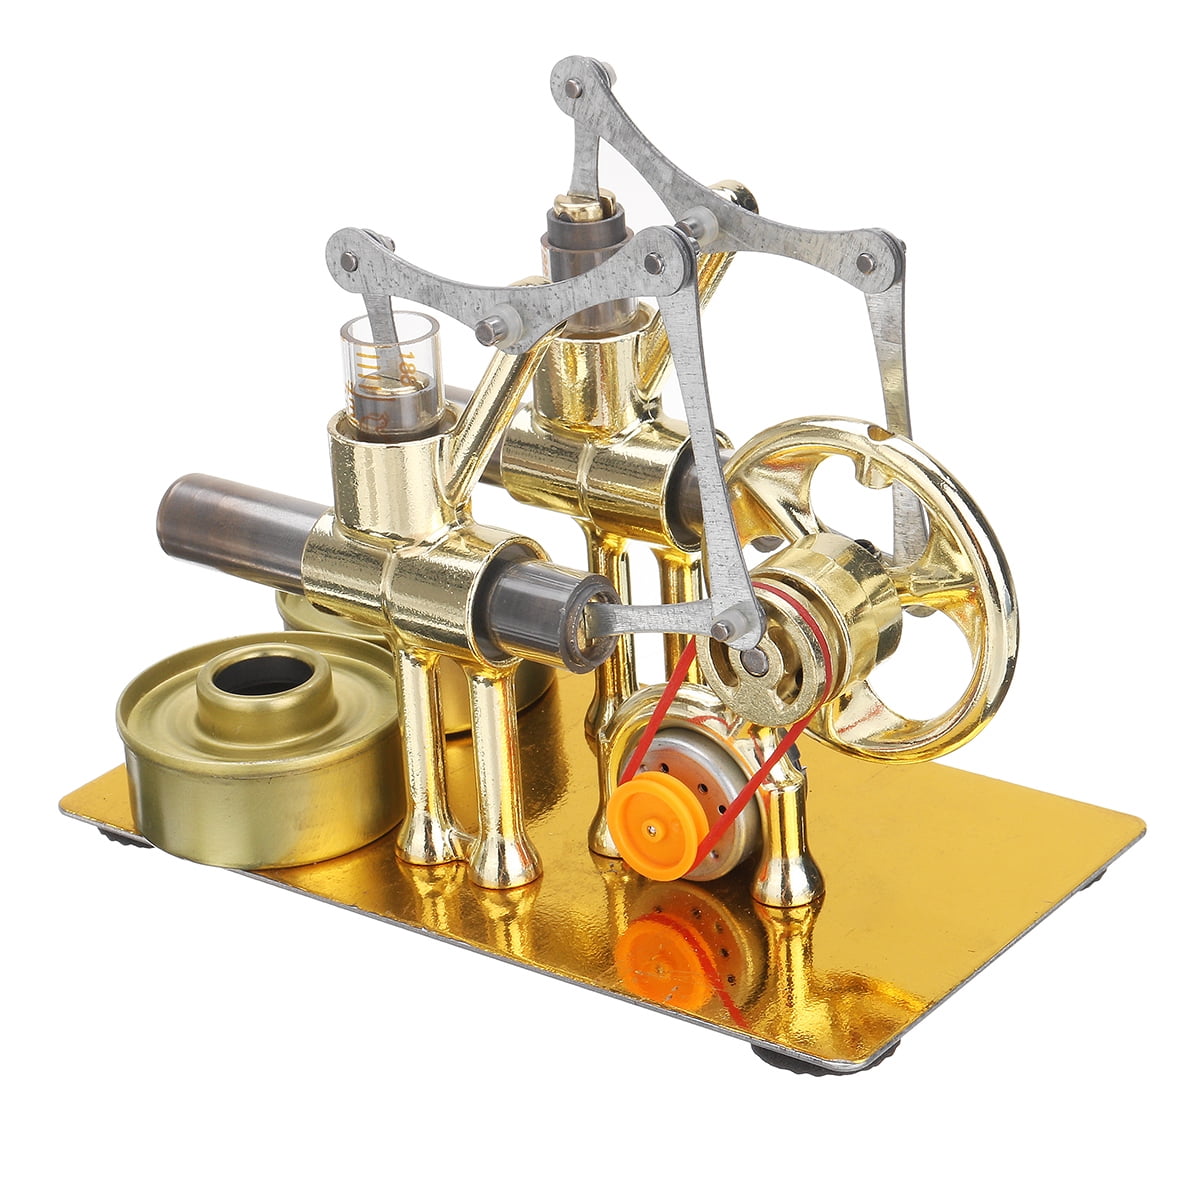 Hot Air Stirling Engine Model Power Generator Motor Educational Toy DIY Kit U1A2